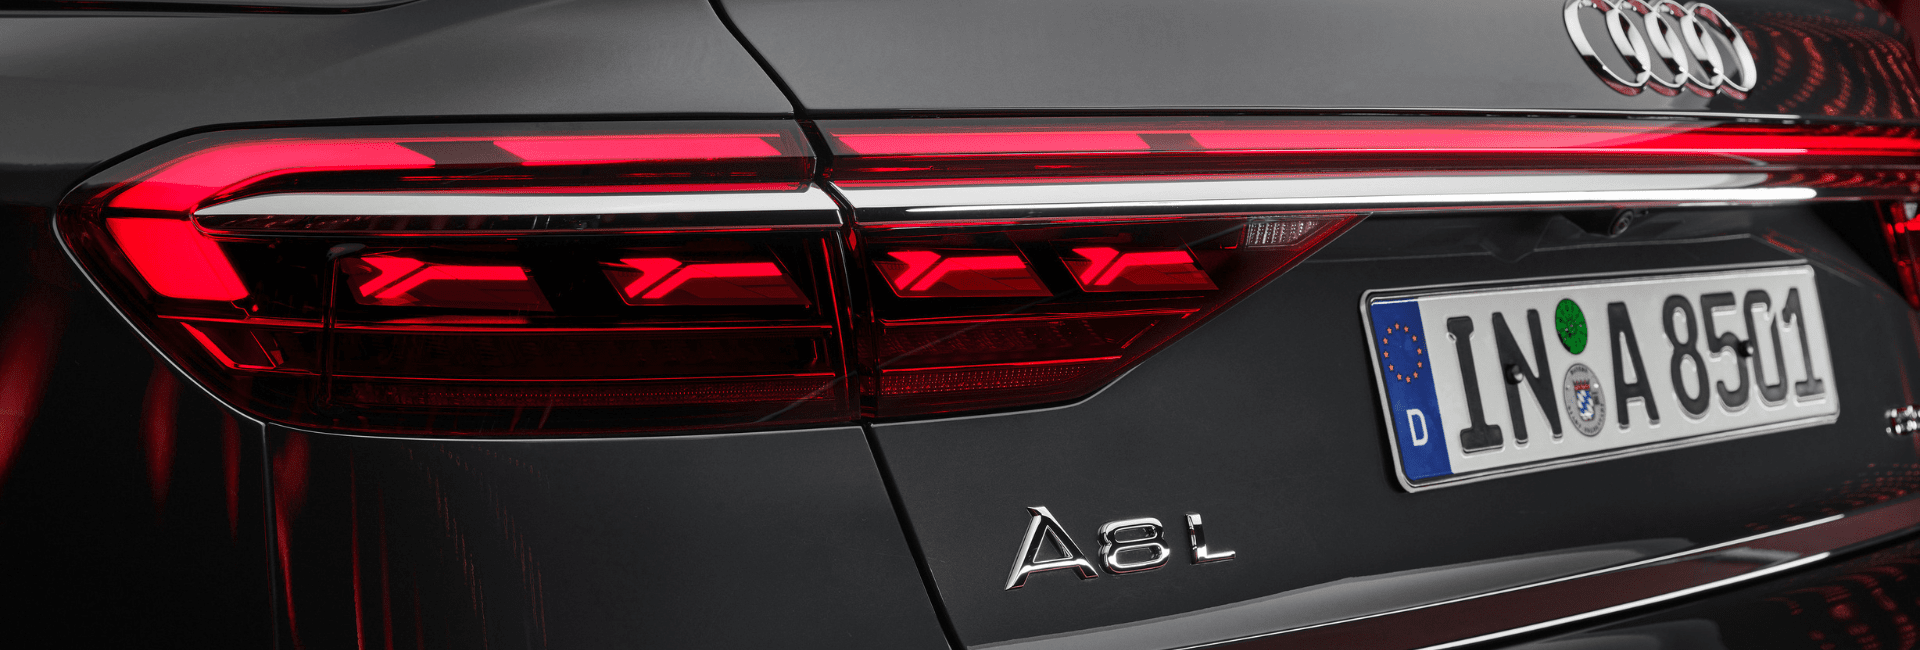 OLED Rear Lighting in Audi A8 | OLEDWorks